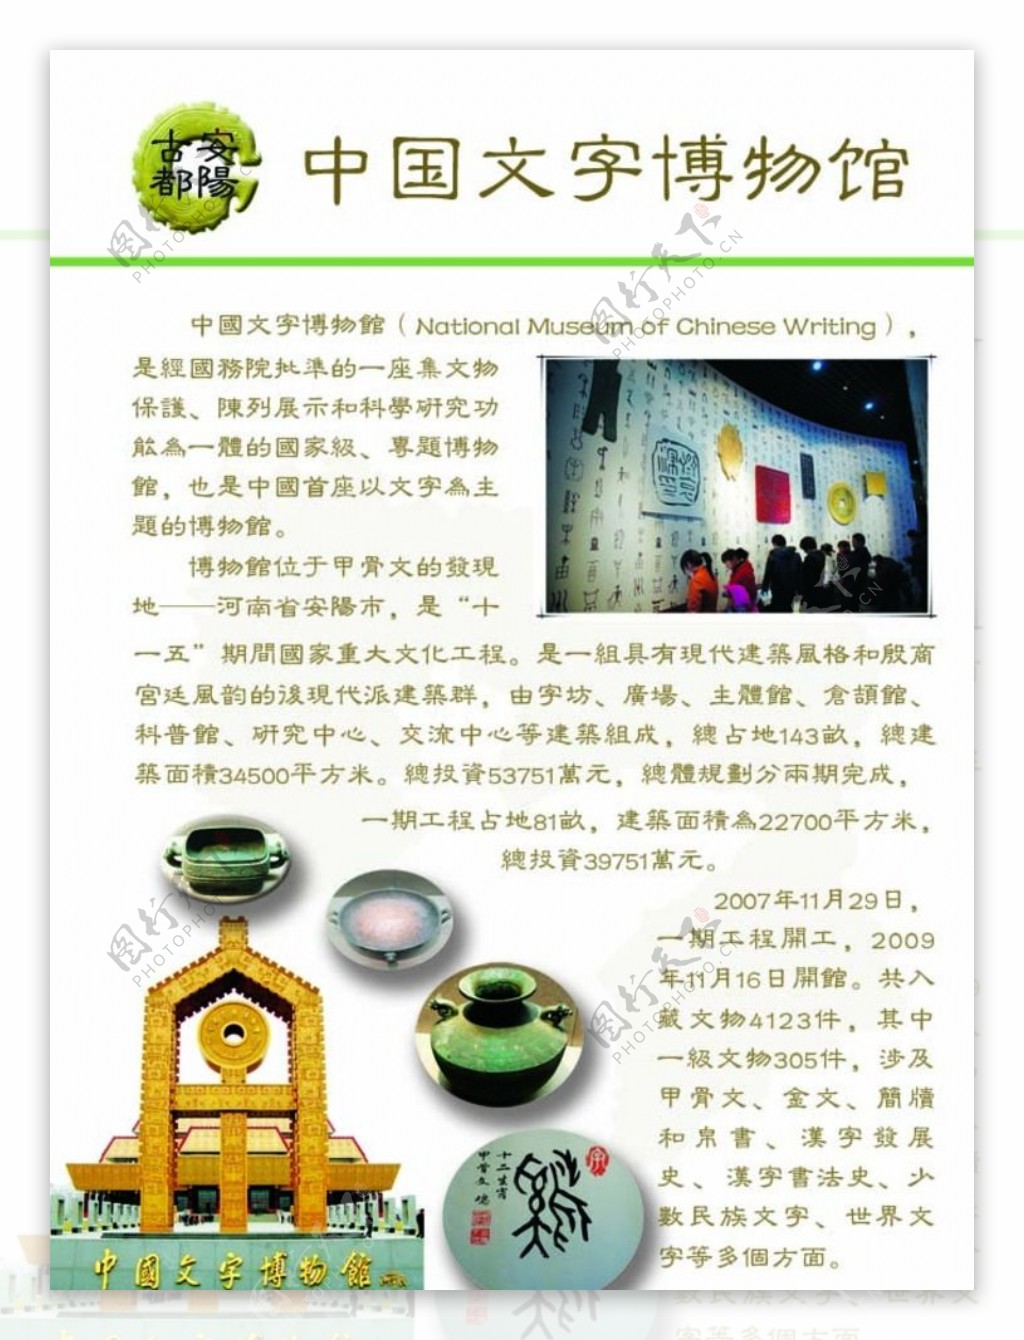 安阳文字博物馆